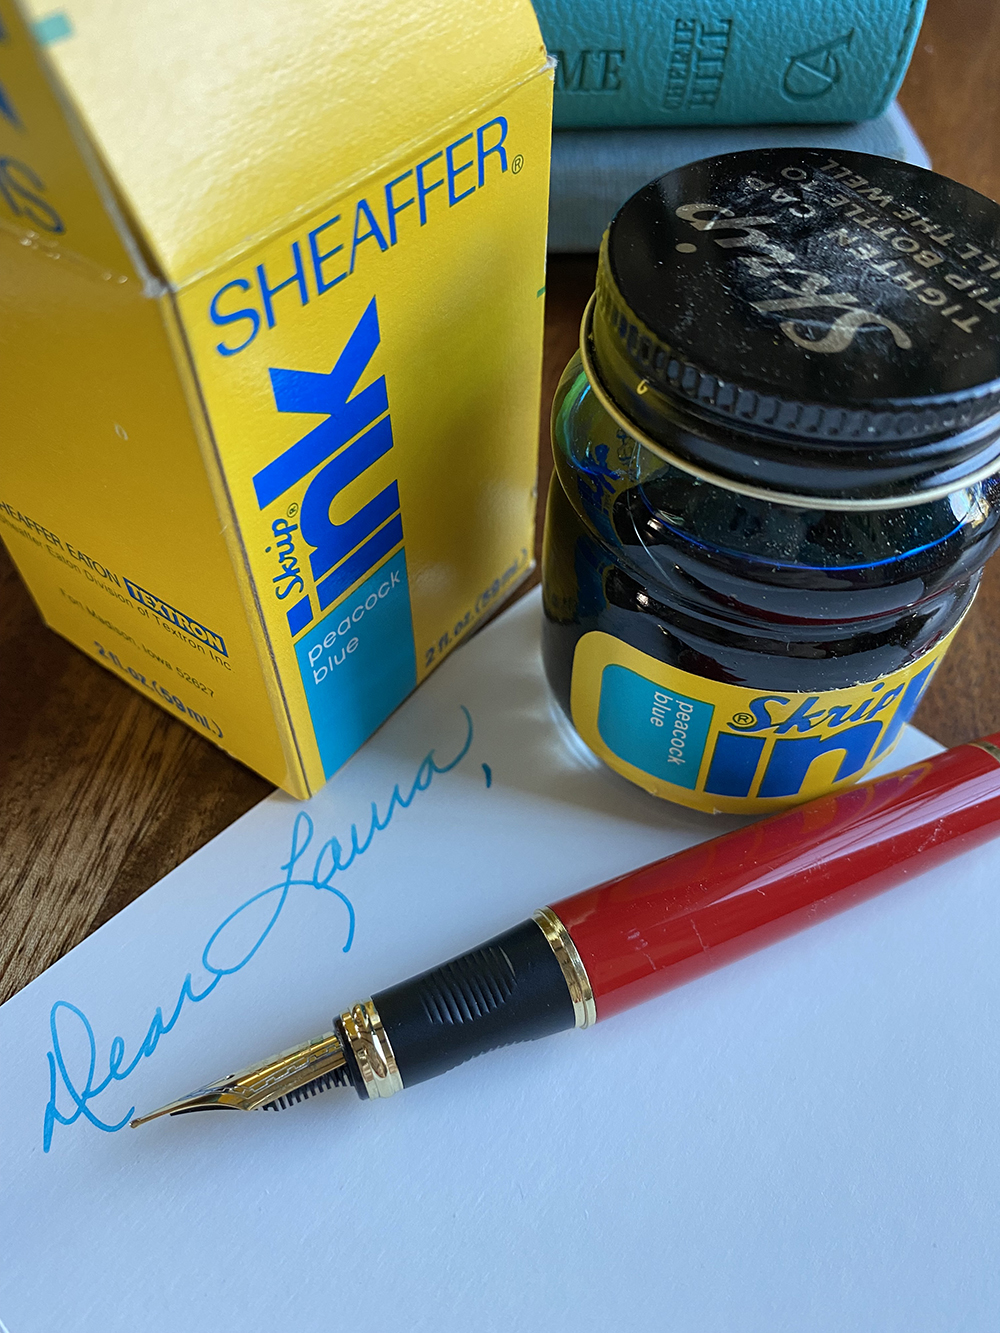 Dear Laura written in peacock blue ink with a fountain pen